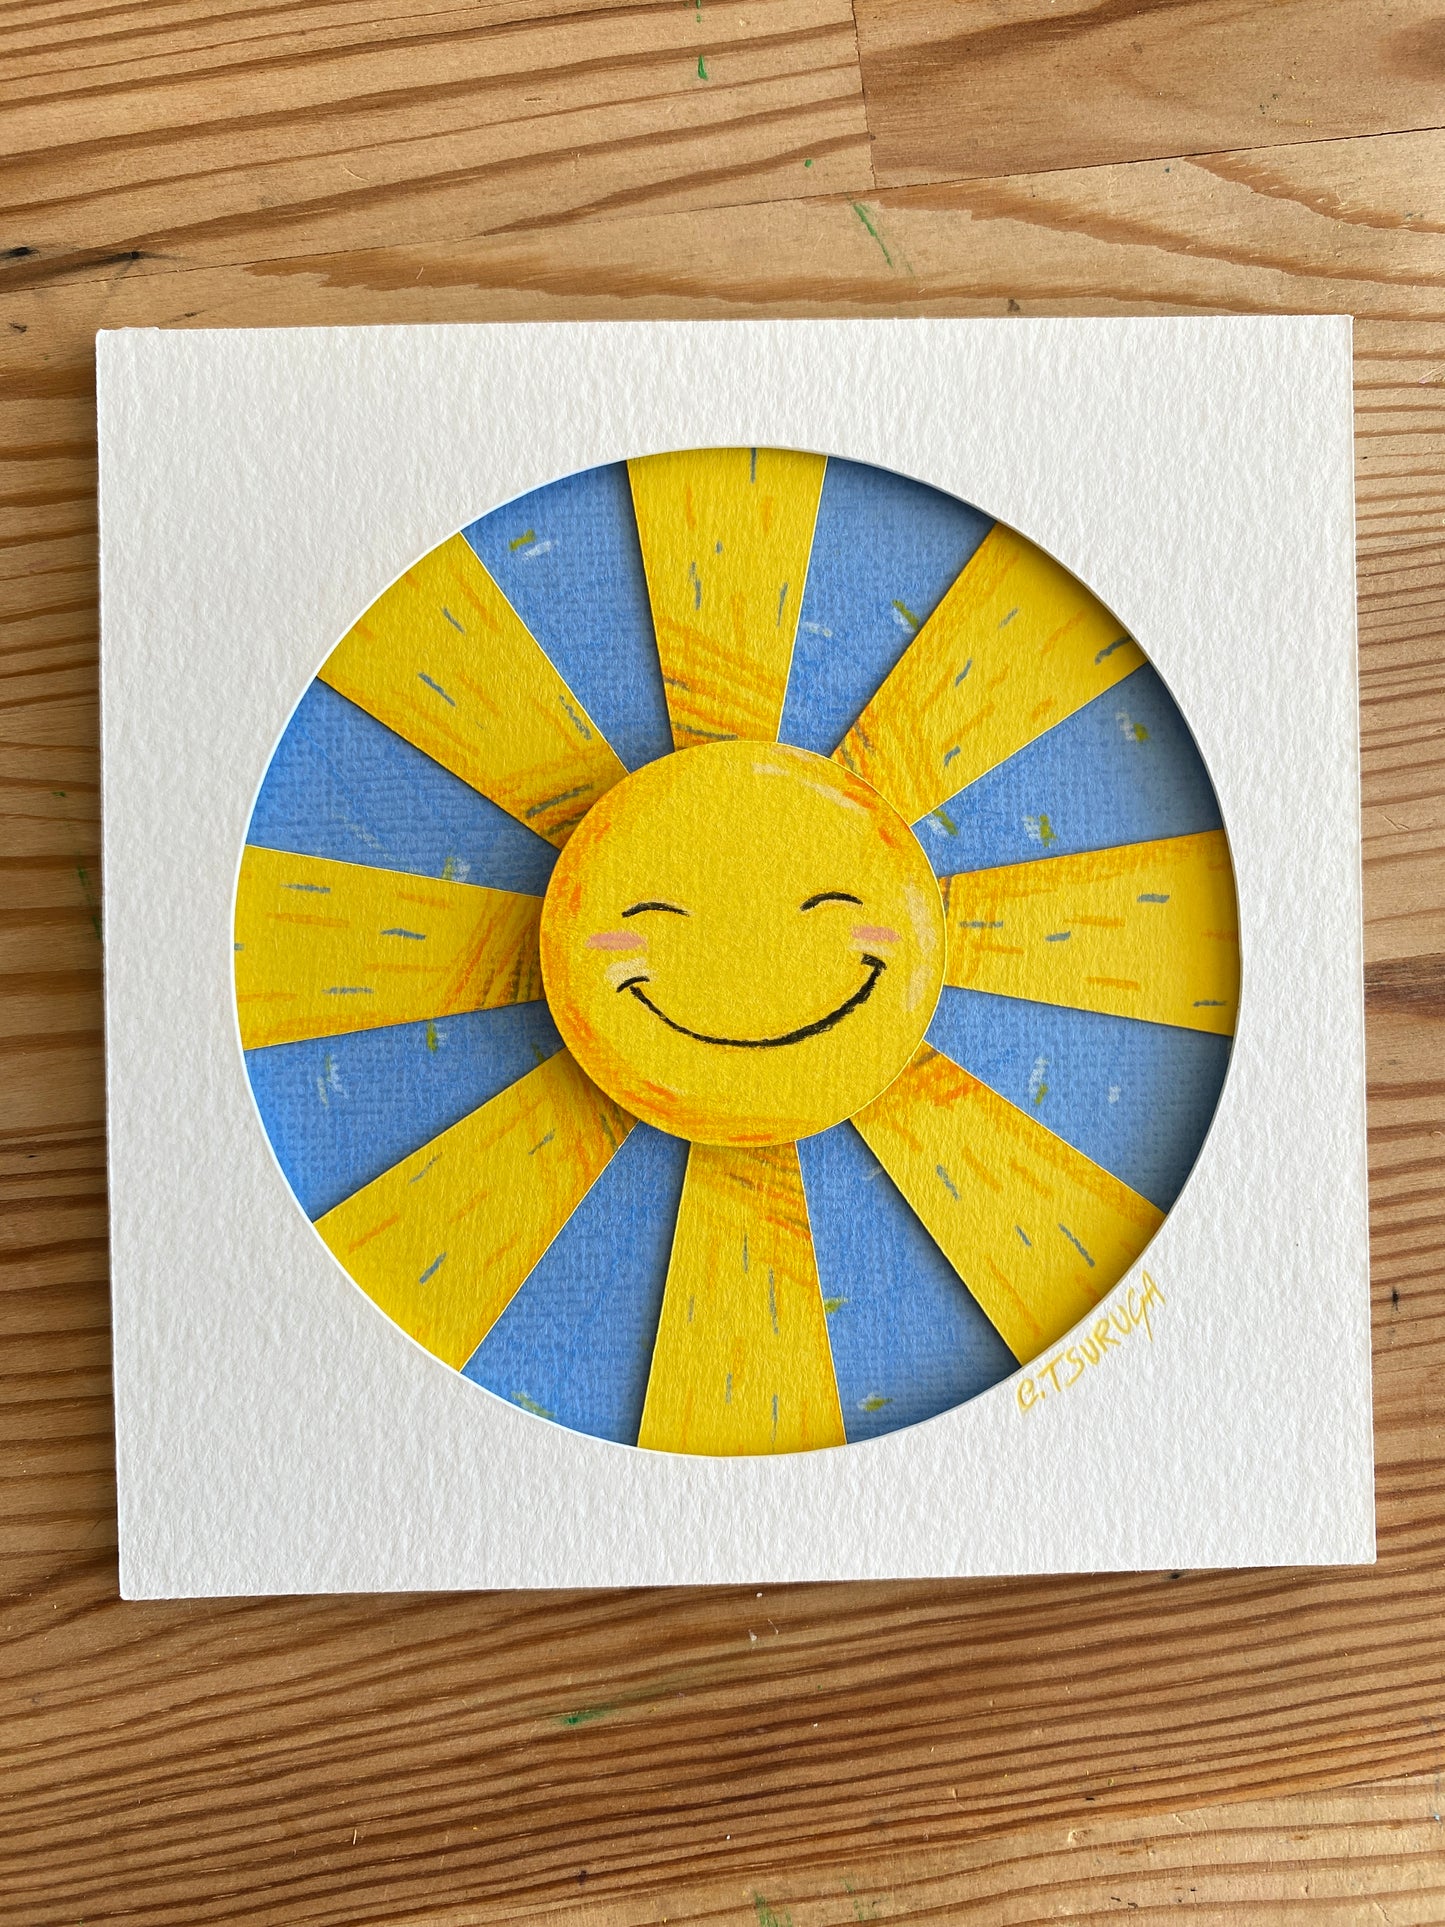 A smiling Sun